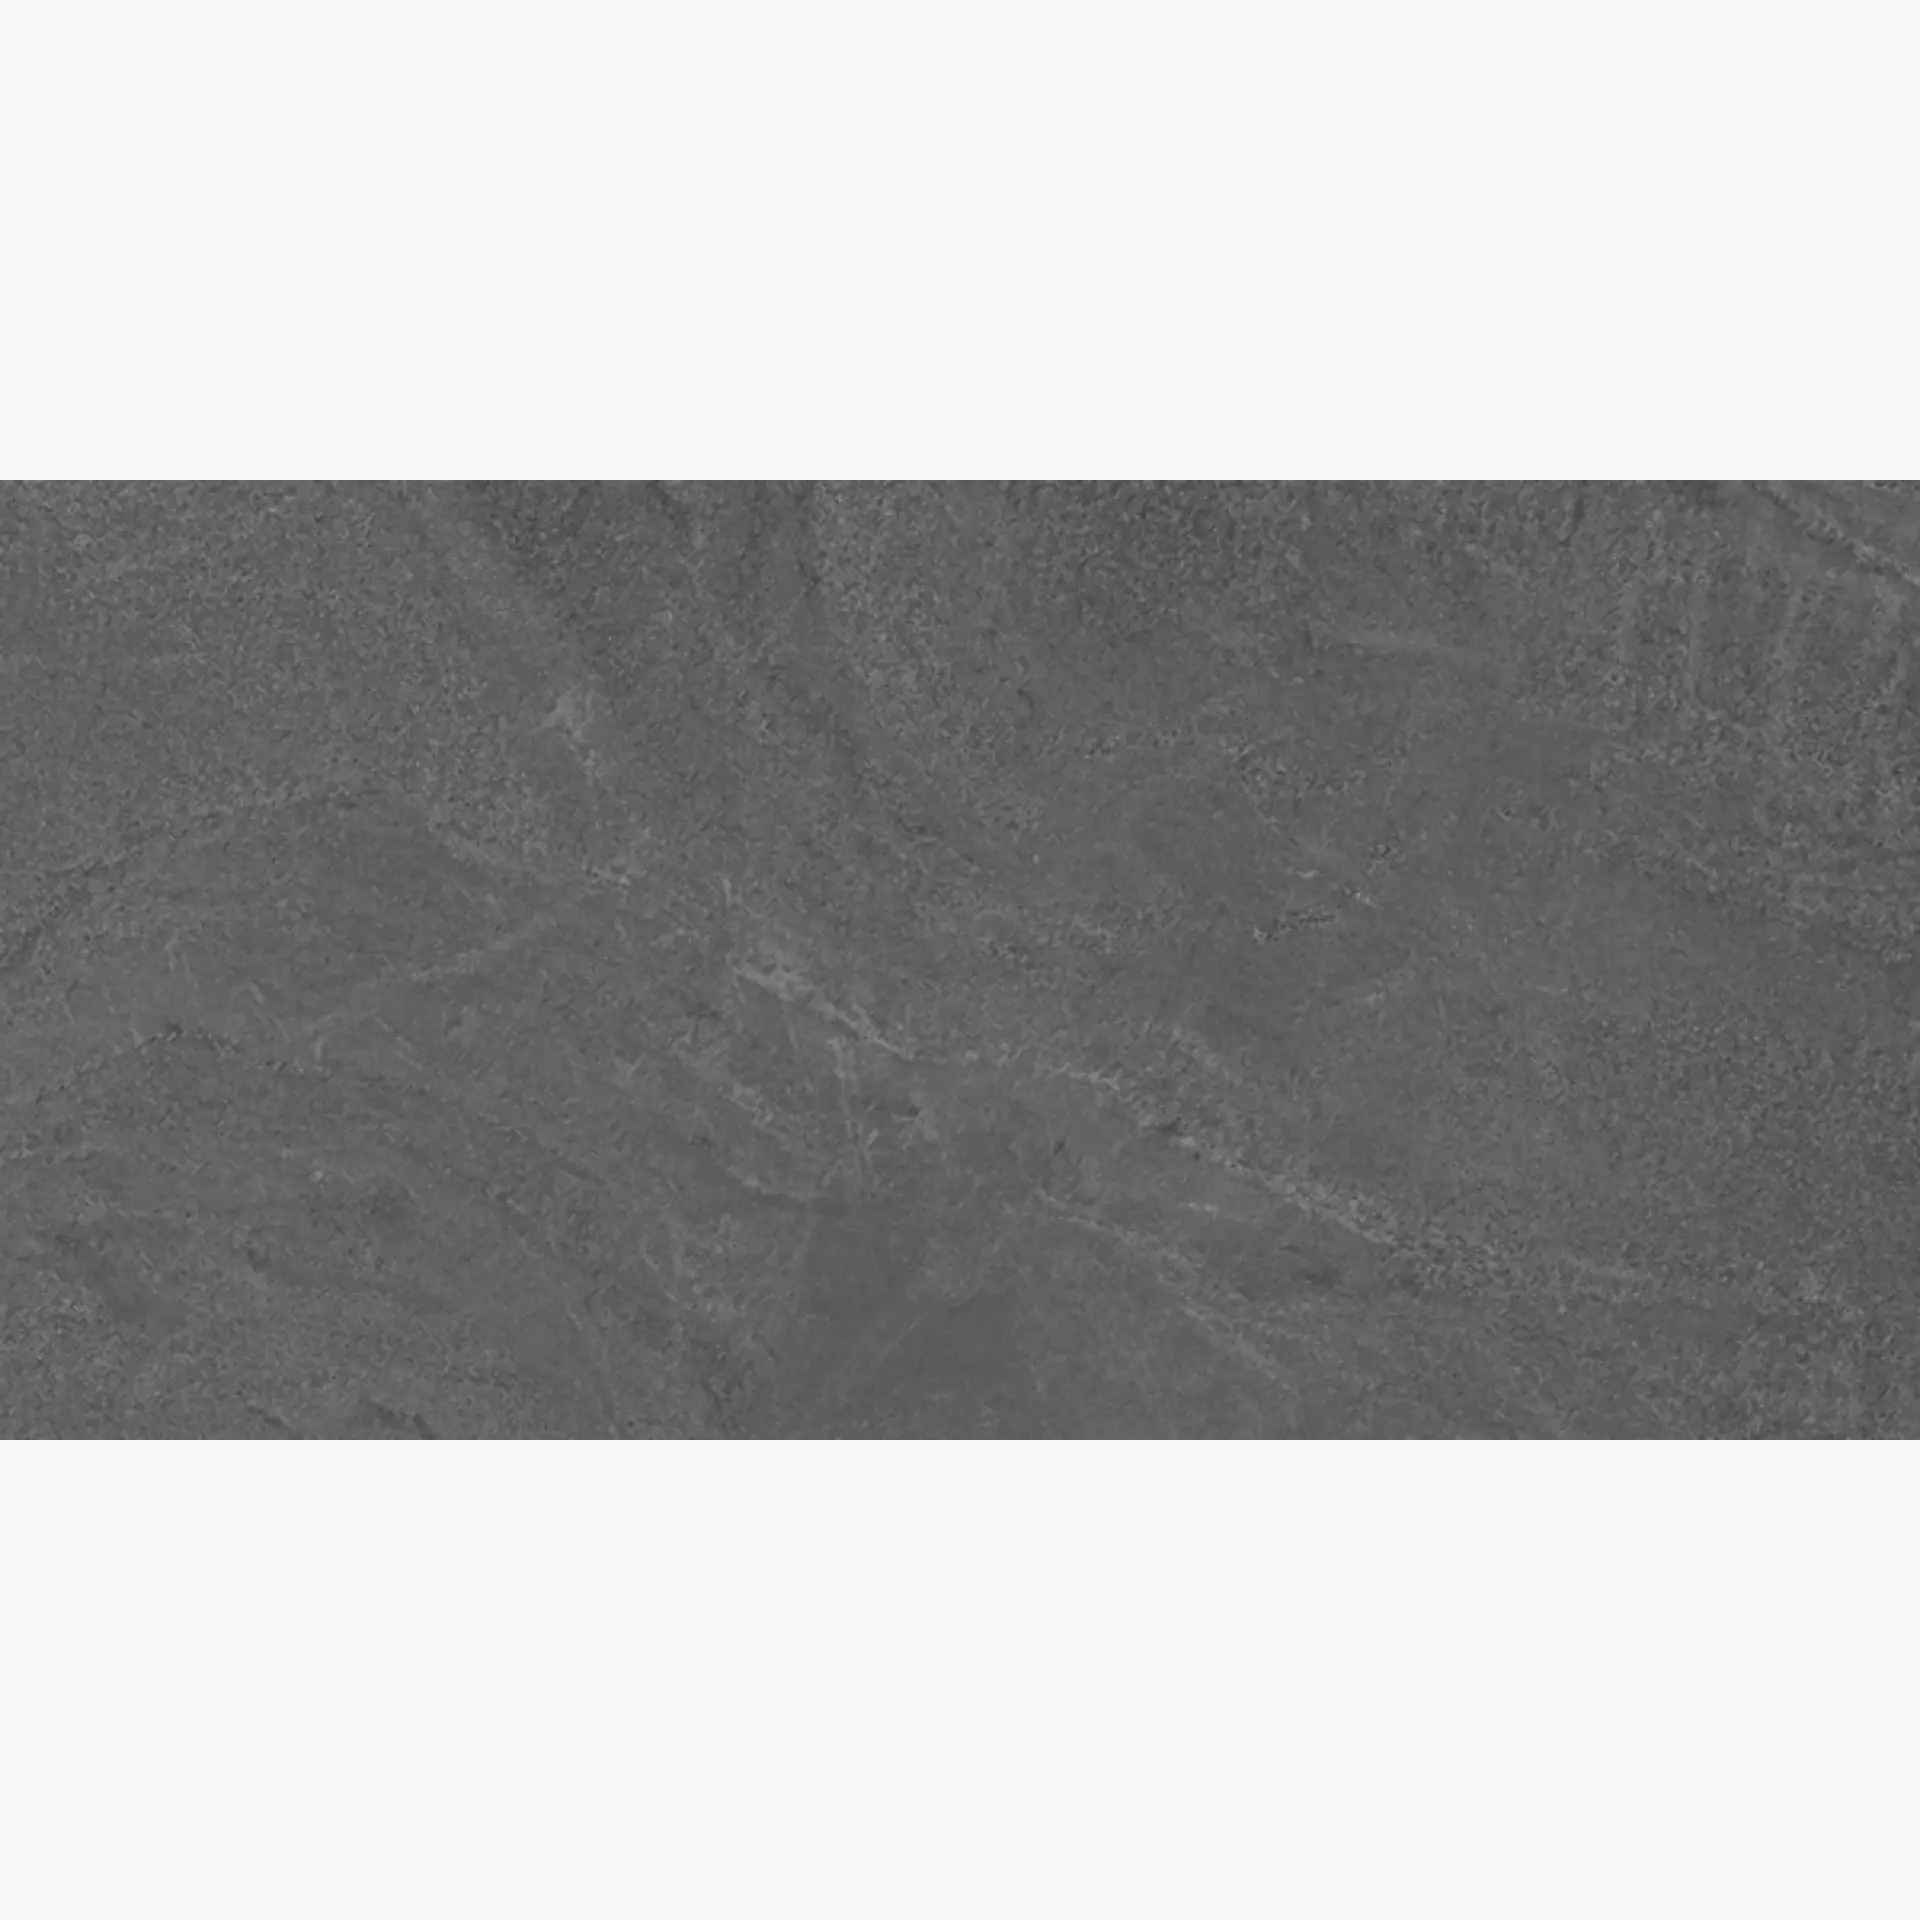 Diesel Diesel Liquid Stone Black Naturale – Matt Treppenplatte L Element Jolly 867866 30x60cm 9mm